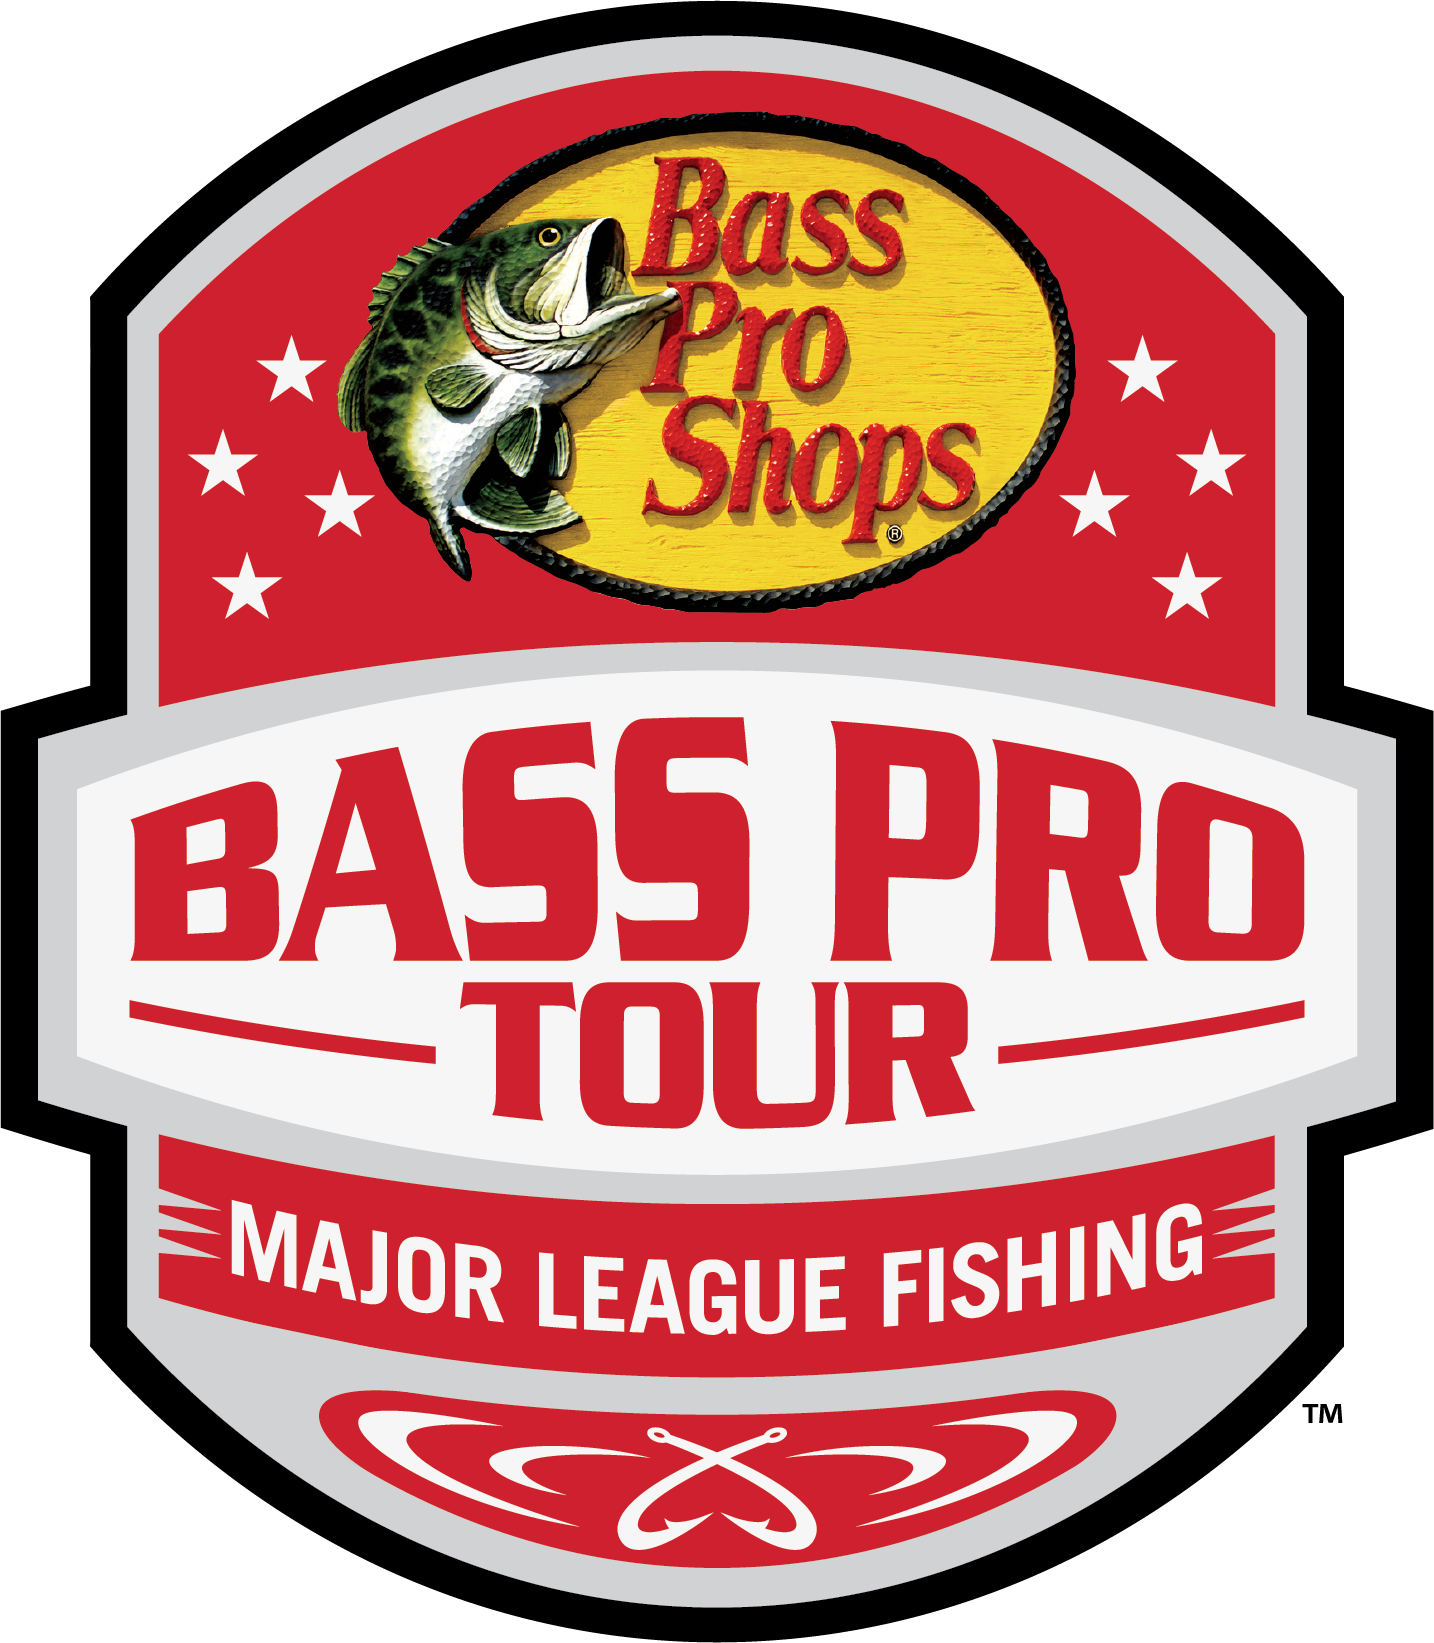 Major League Fishing Bass Pro Tour Set to Visit Harris Chain of